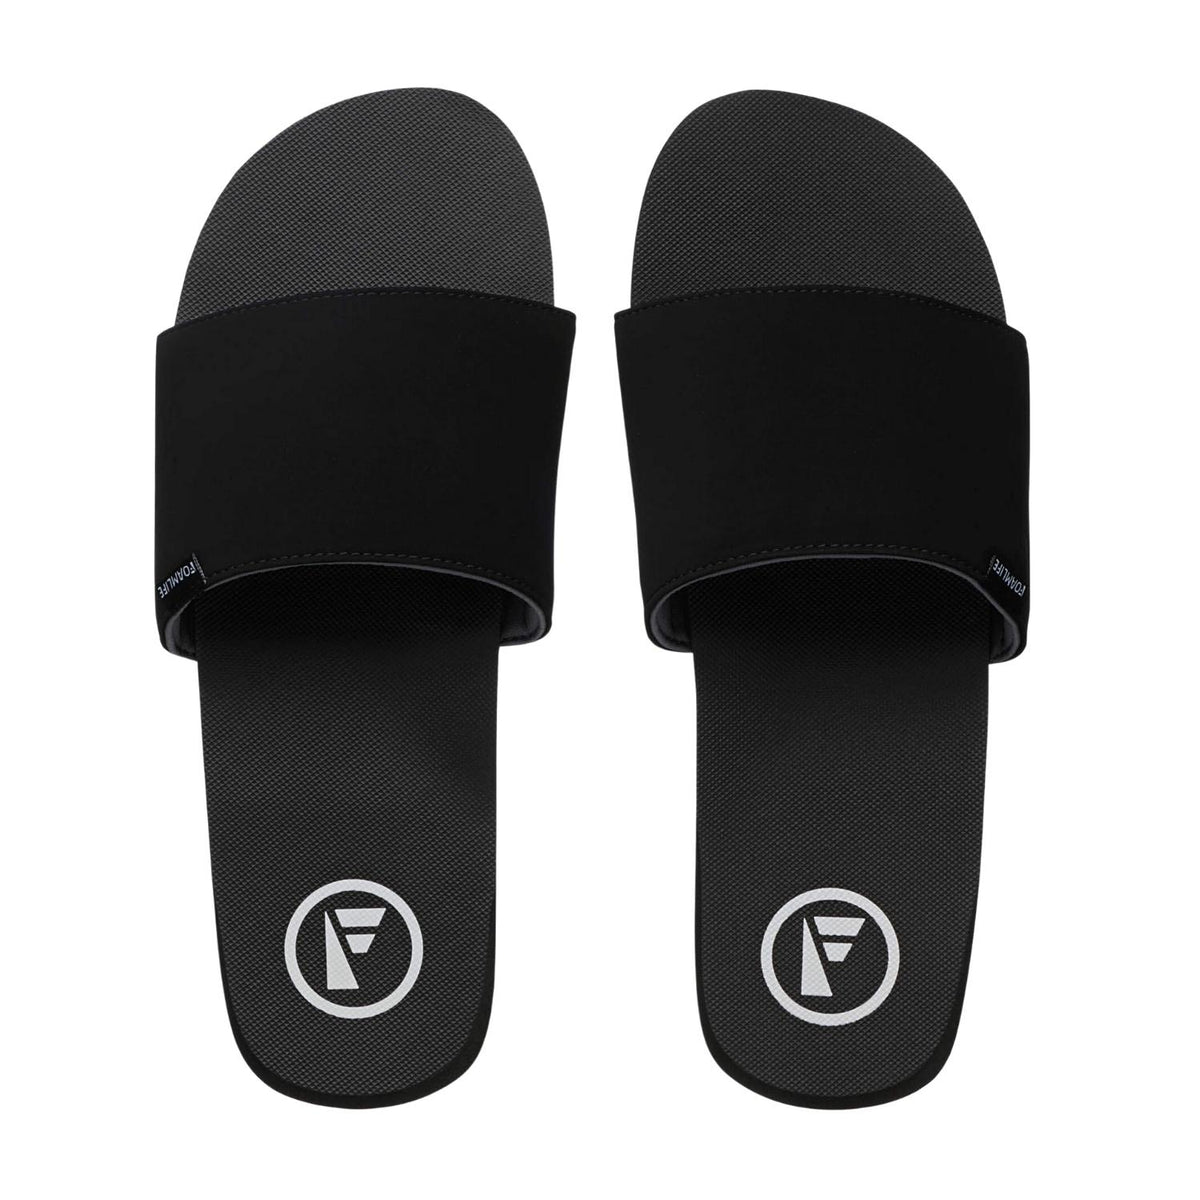 Foamlife Tarlan Slide Slider - Black - Mens Flip Flops by FoamLife